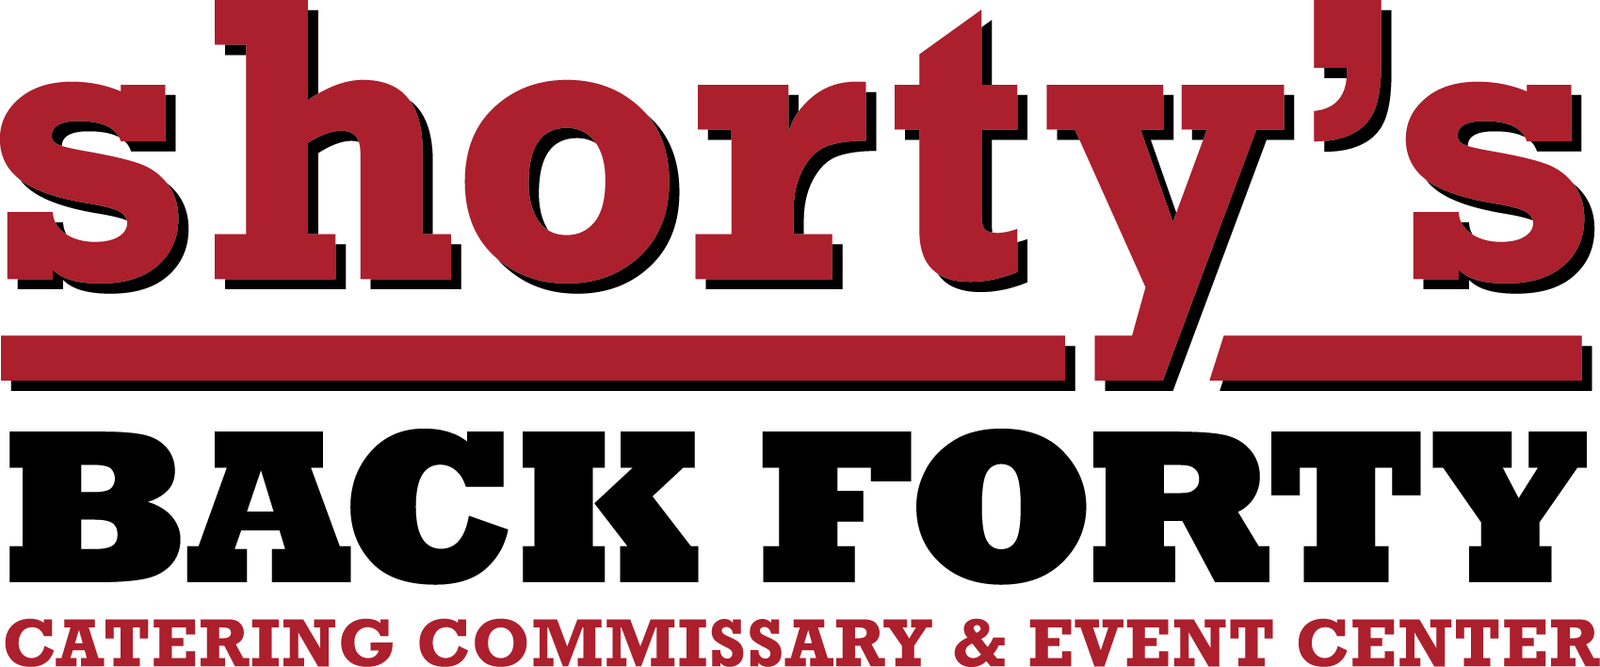 Shorty's Back Forty logo.